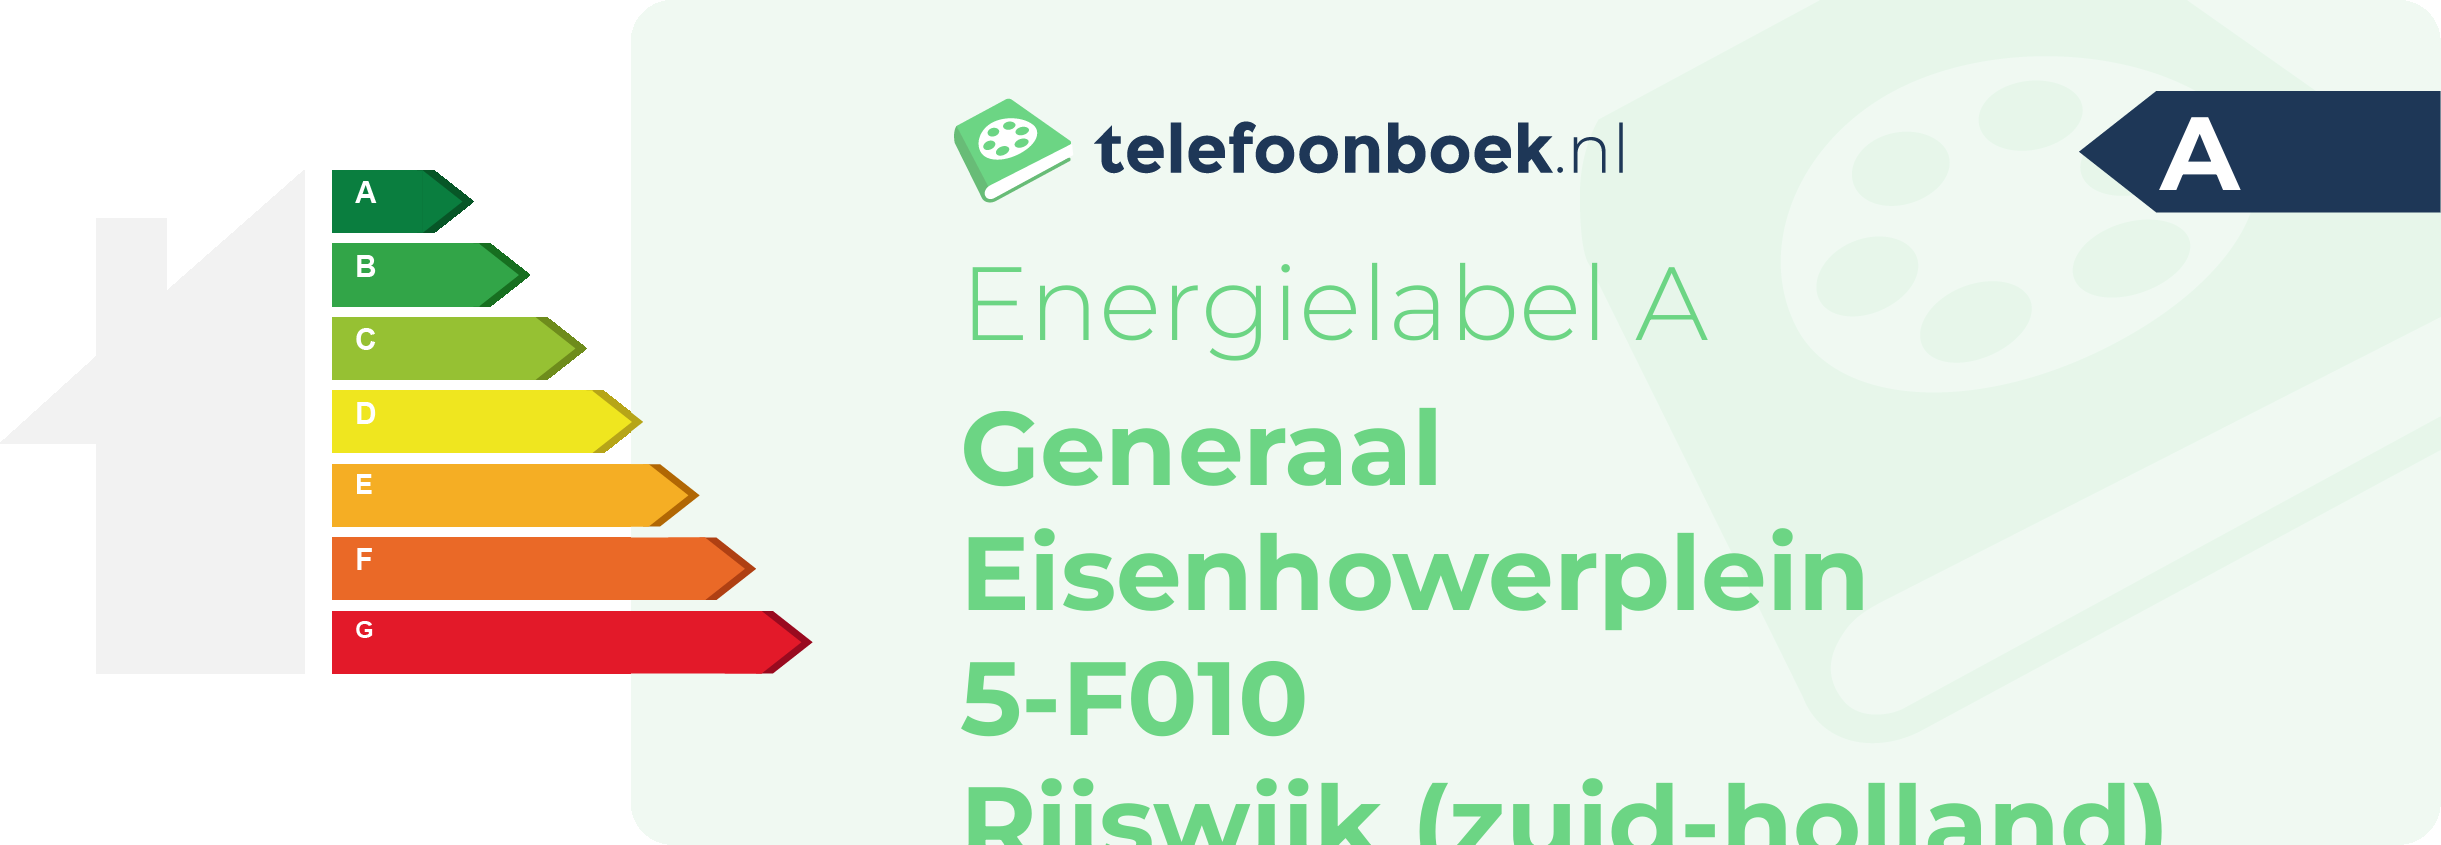 Energielabel Generaal Eisenhowerplein 5-F010 Rijswijk (Zuid-Holland)